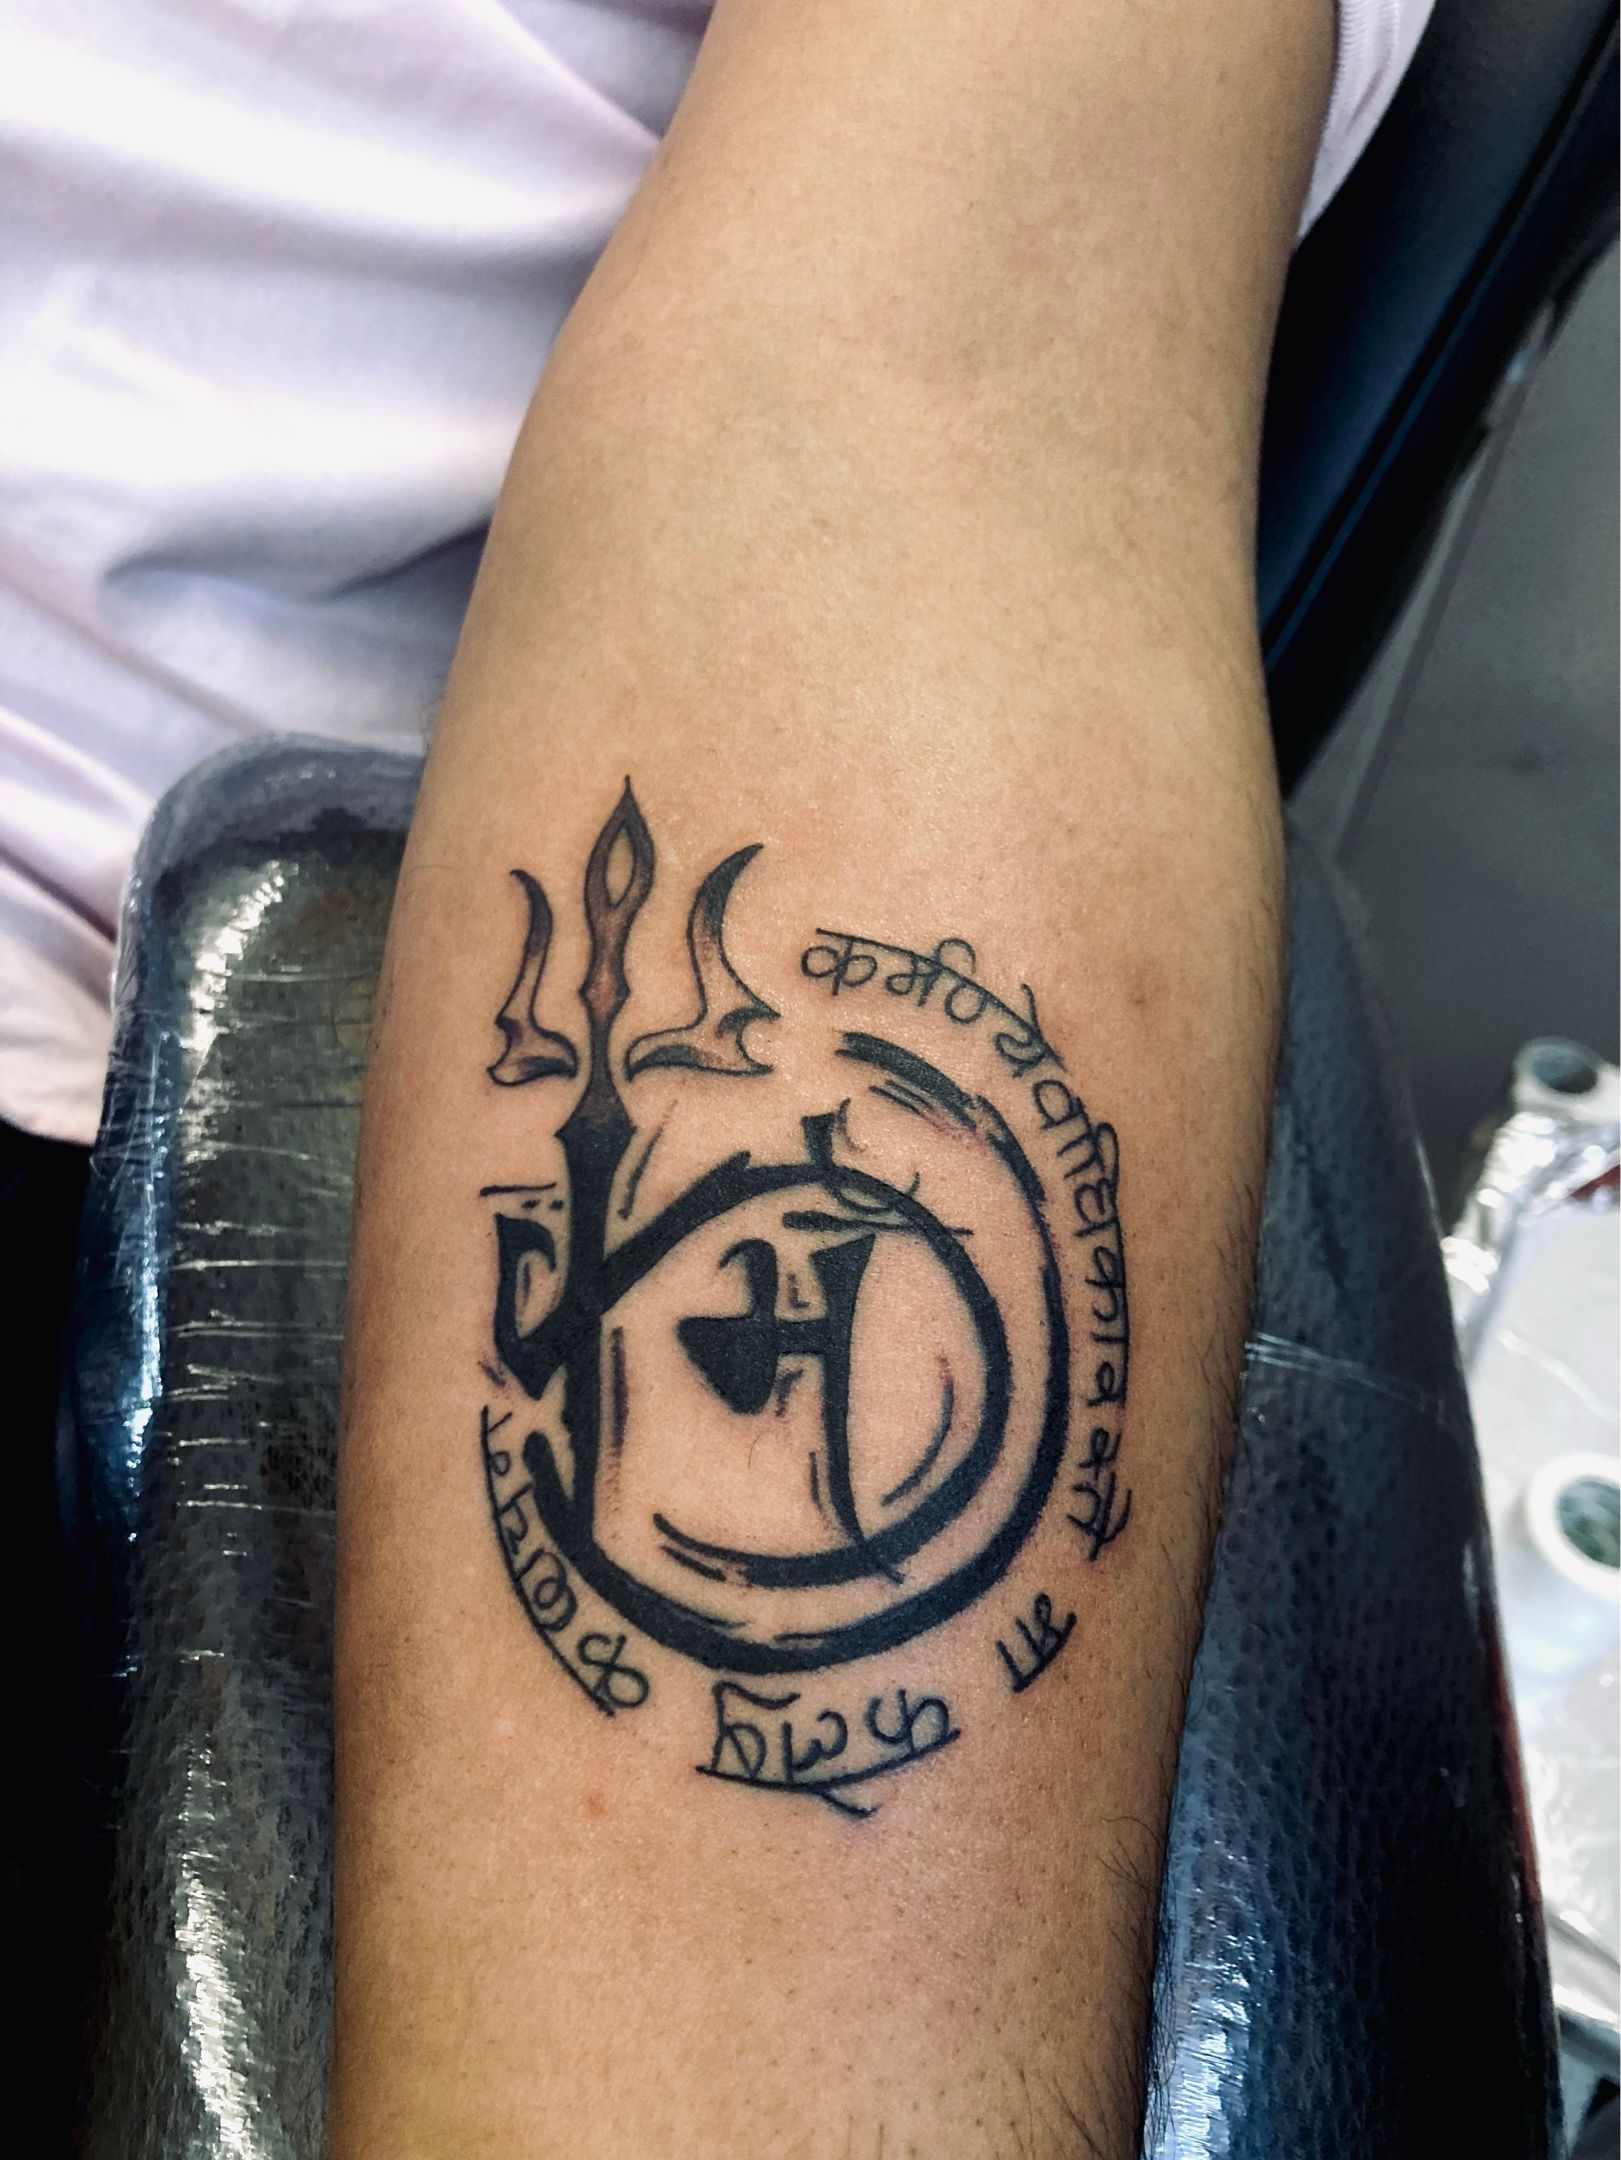 Kingsman tattoo  art studio on Twitter KARMA  httpstcoUbNLDFmCun   Twitter